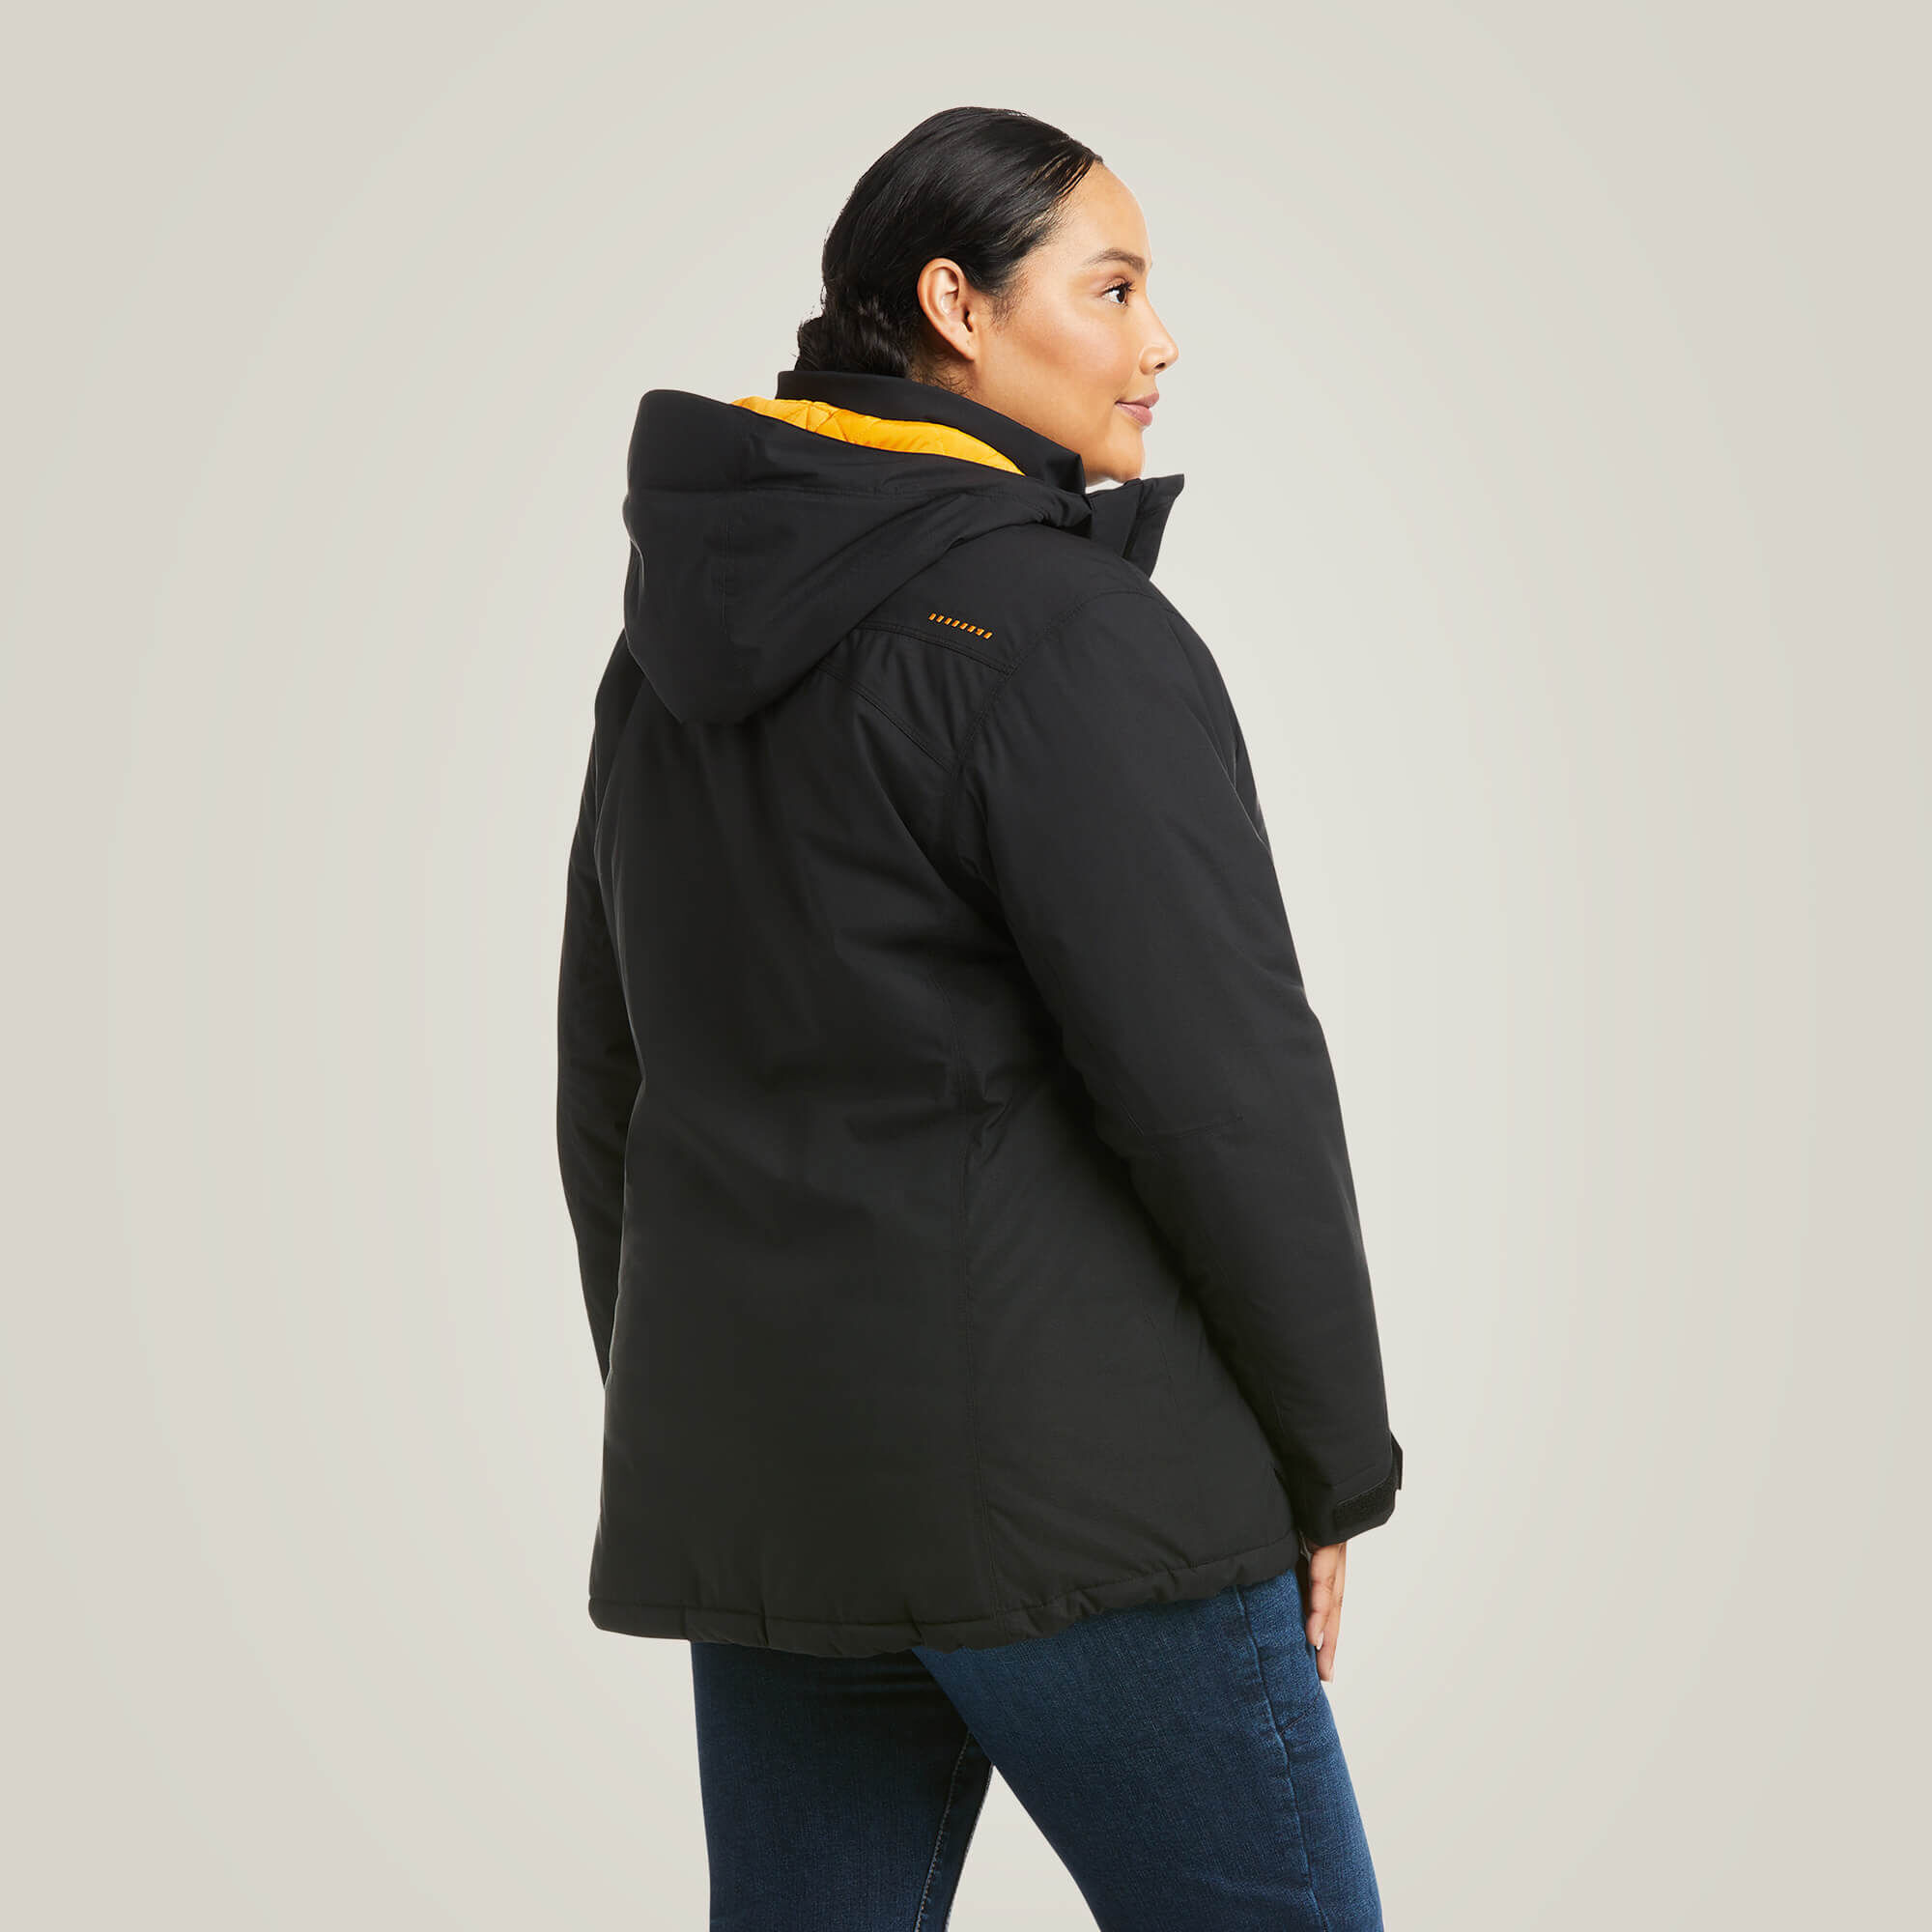 Women's Rebar Storm Fighter 2.0 Waterproof Jacket in Black, Size: Medium by  Ariat